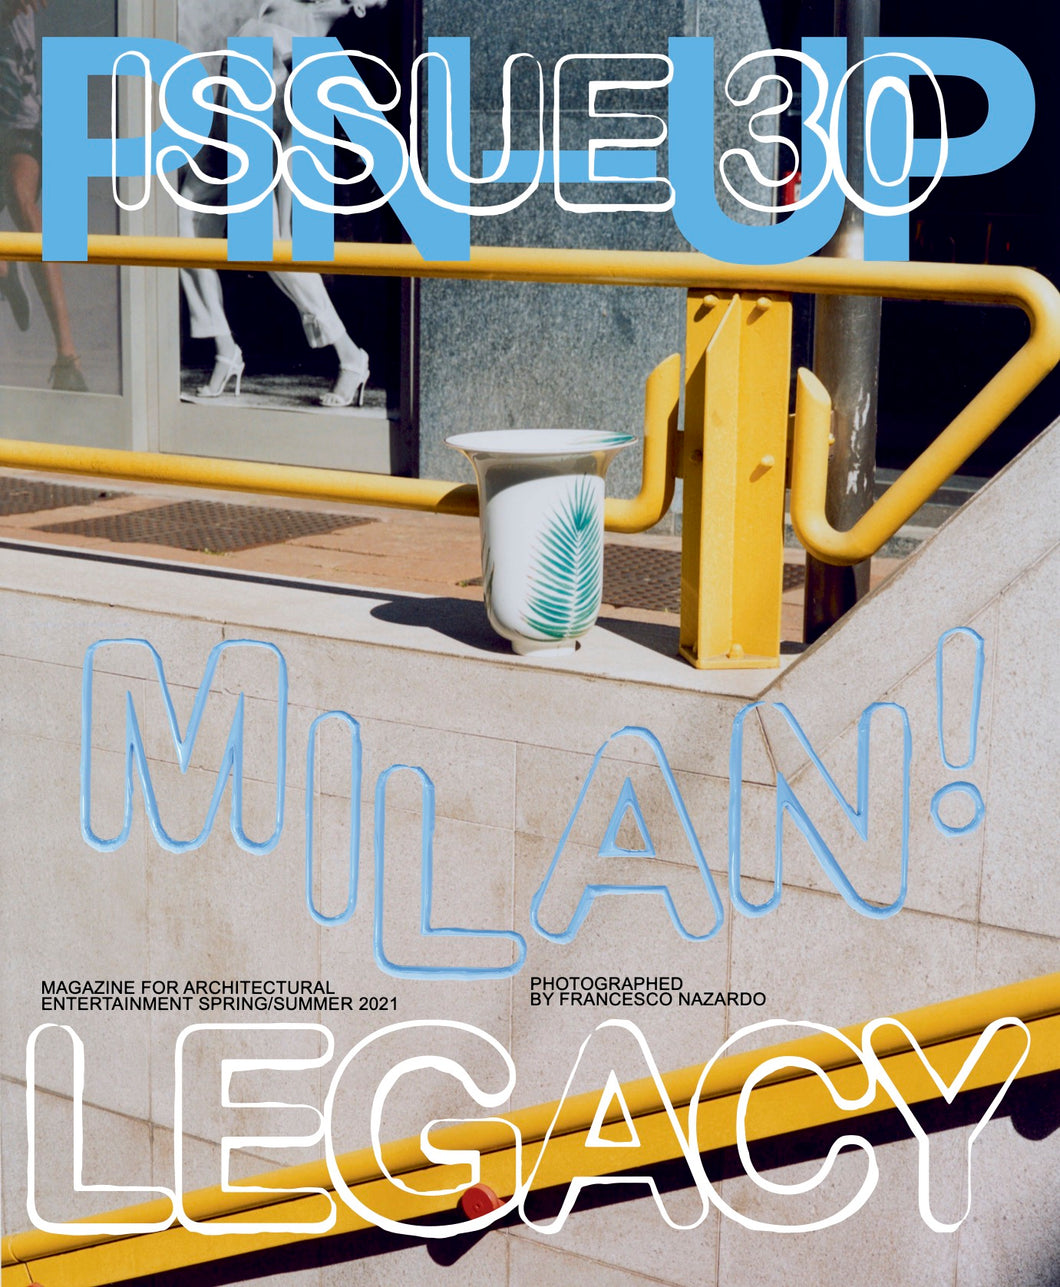 PIN–UP MAGAZINE: Issue 30 (Milan!)